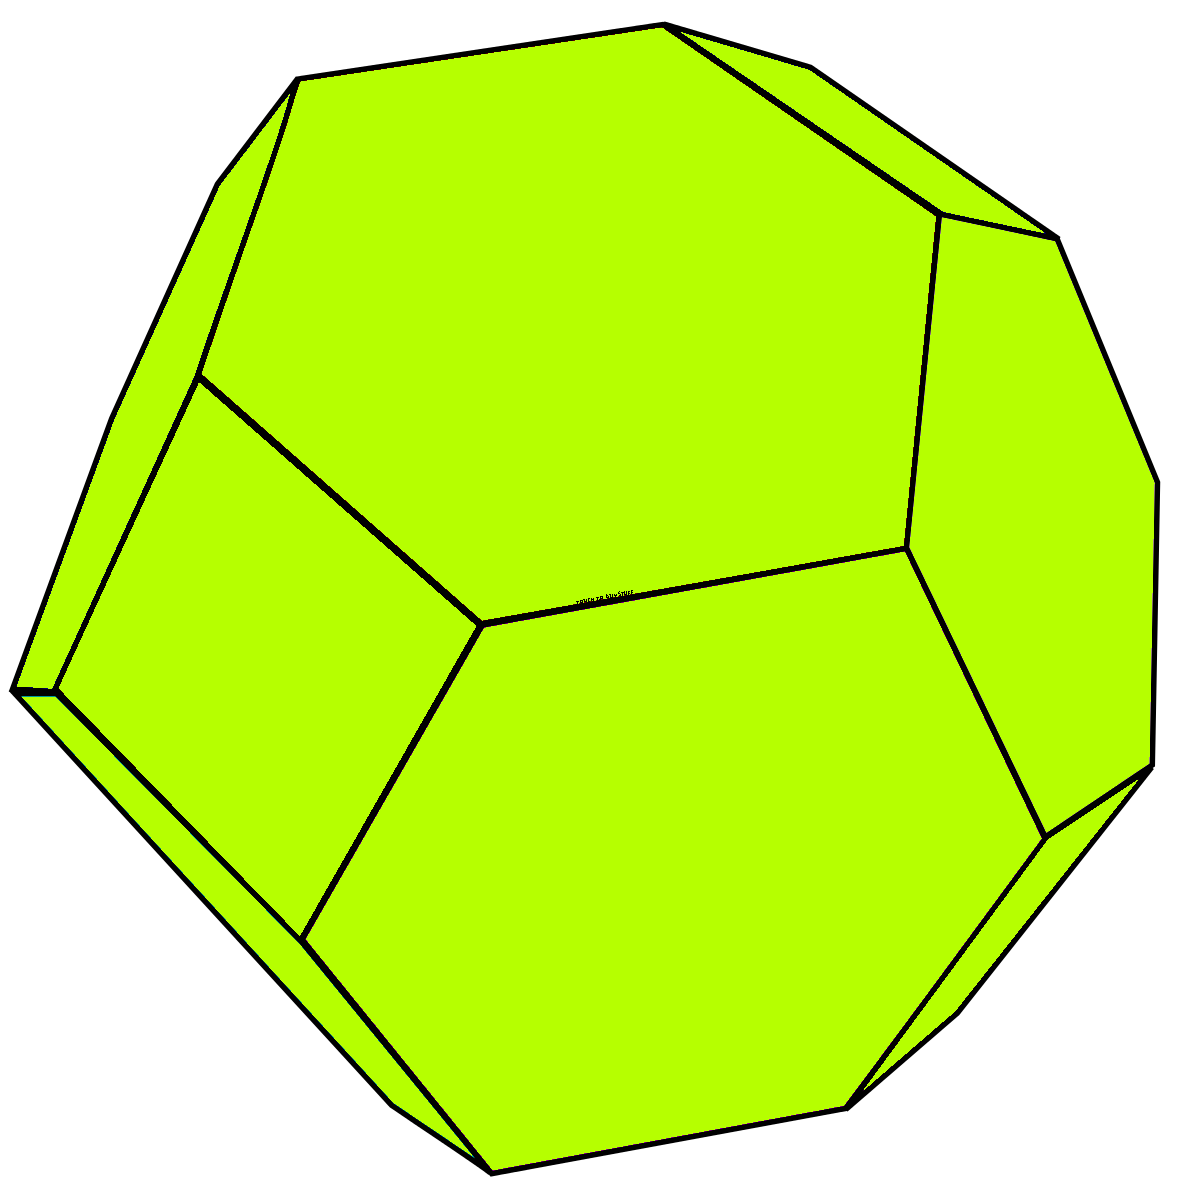 truncated octahedron template pdf